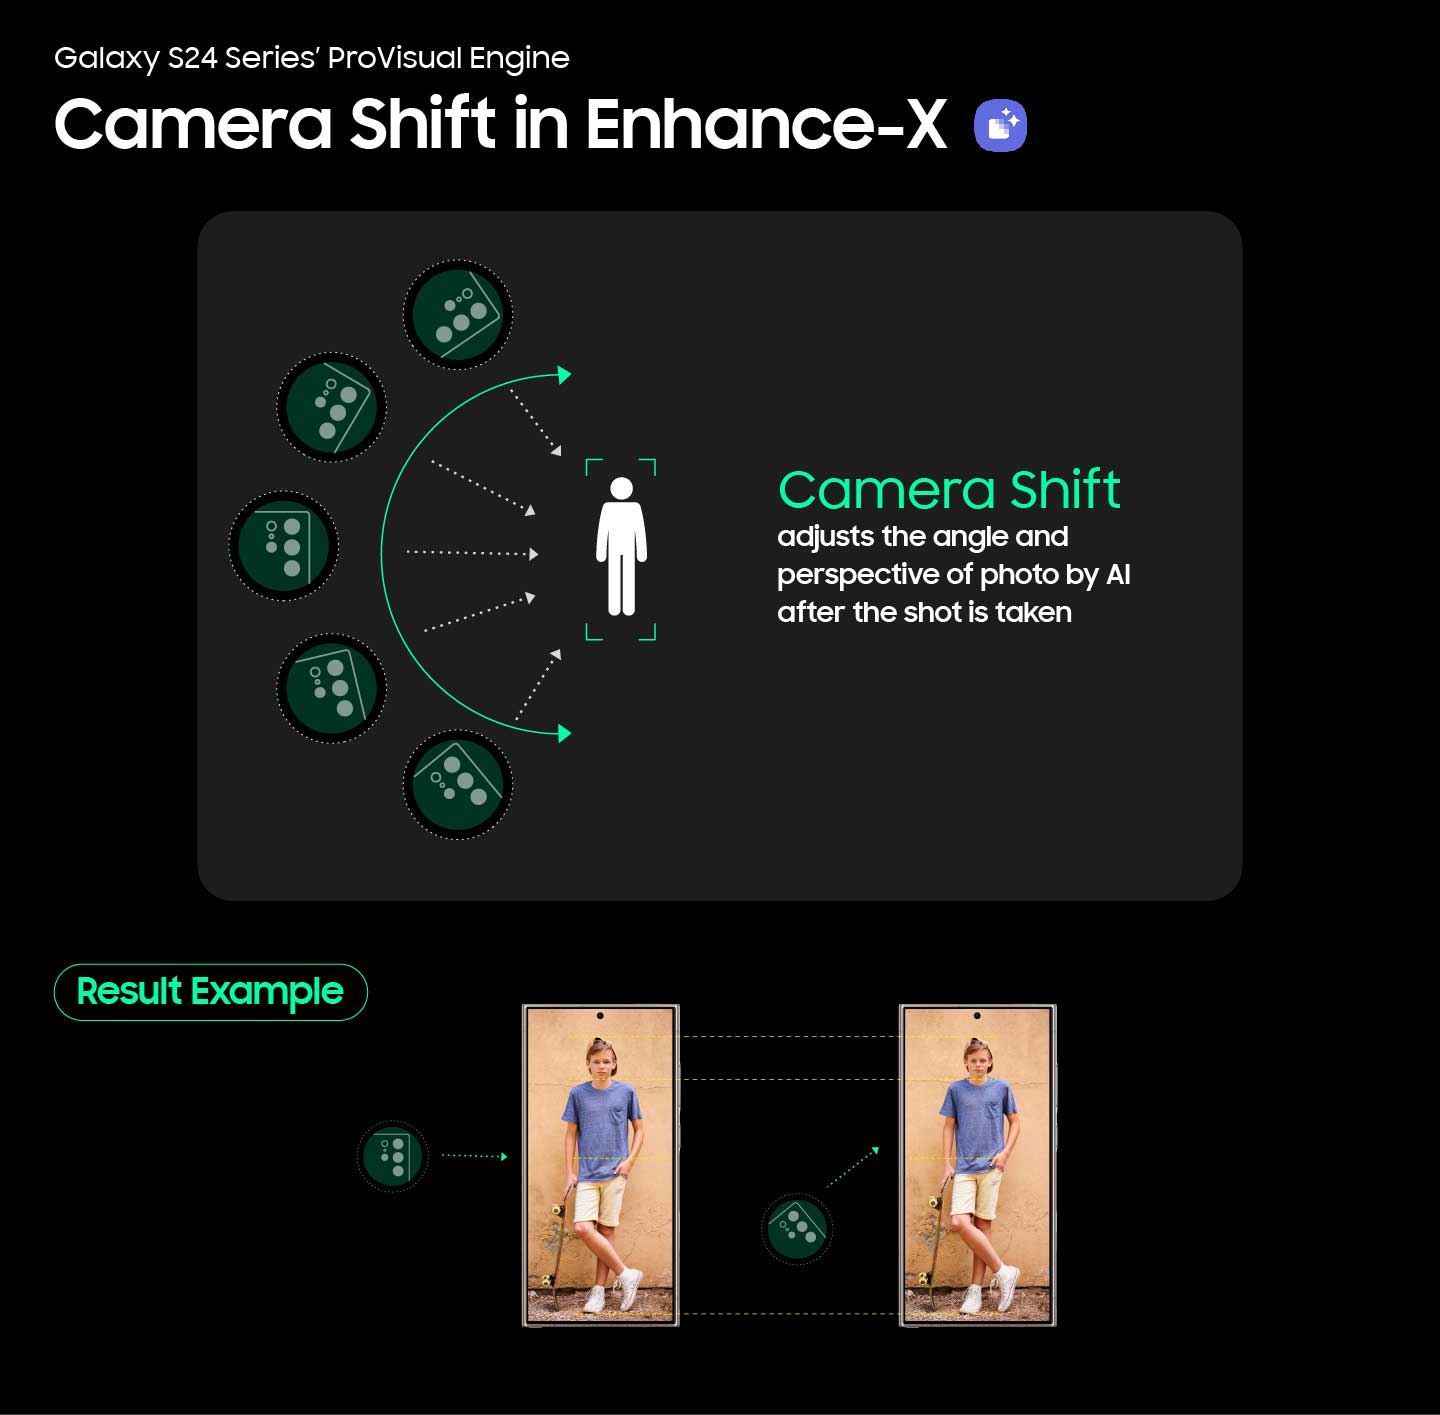 Samsung Provisualengine Capture Perfect Shot Camera Shift